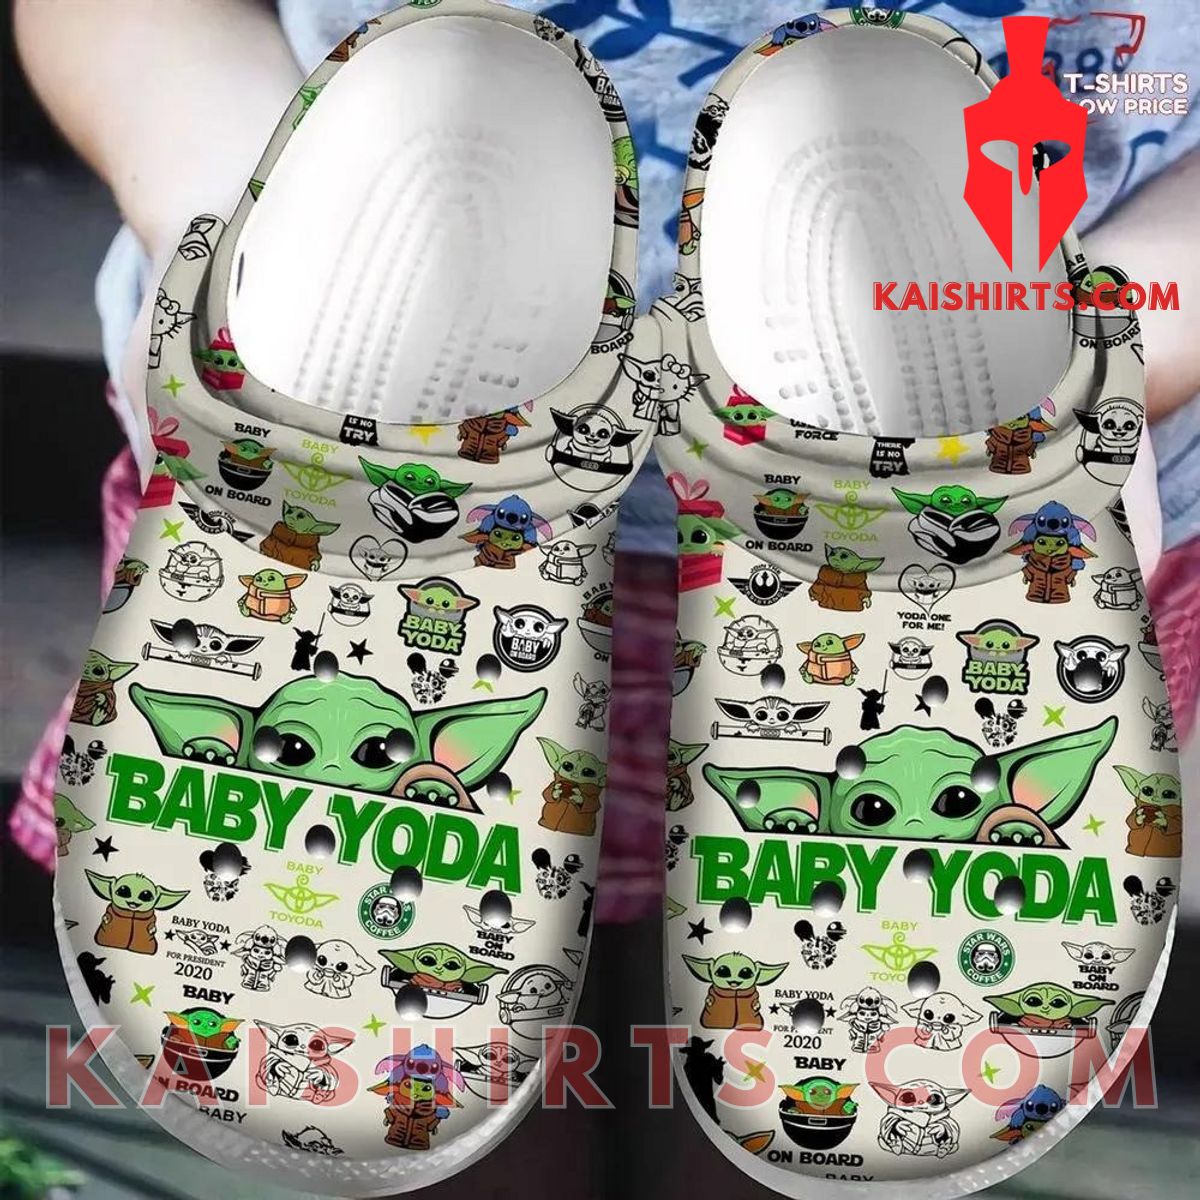 Baby Yoda On Board Clogband Crocs Shoes